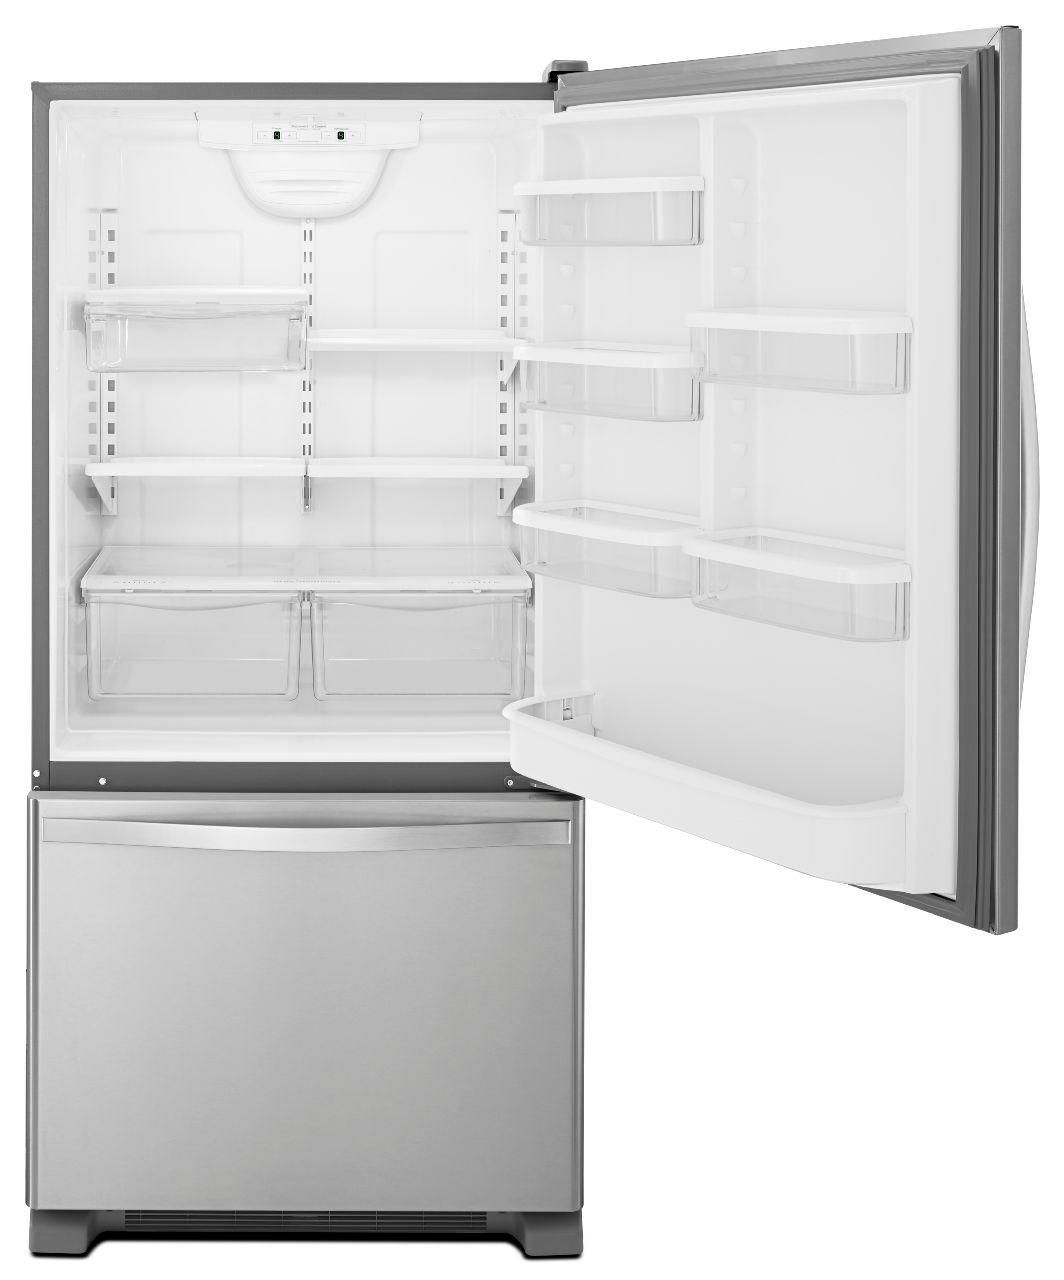 Whirlpool 21 9 Cu Ft Bottom Freezer Refrigerator Stainless Steel Wrb322dmbm Best Buy